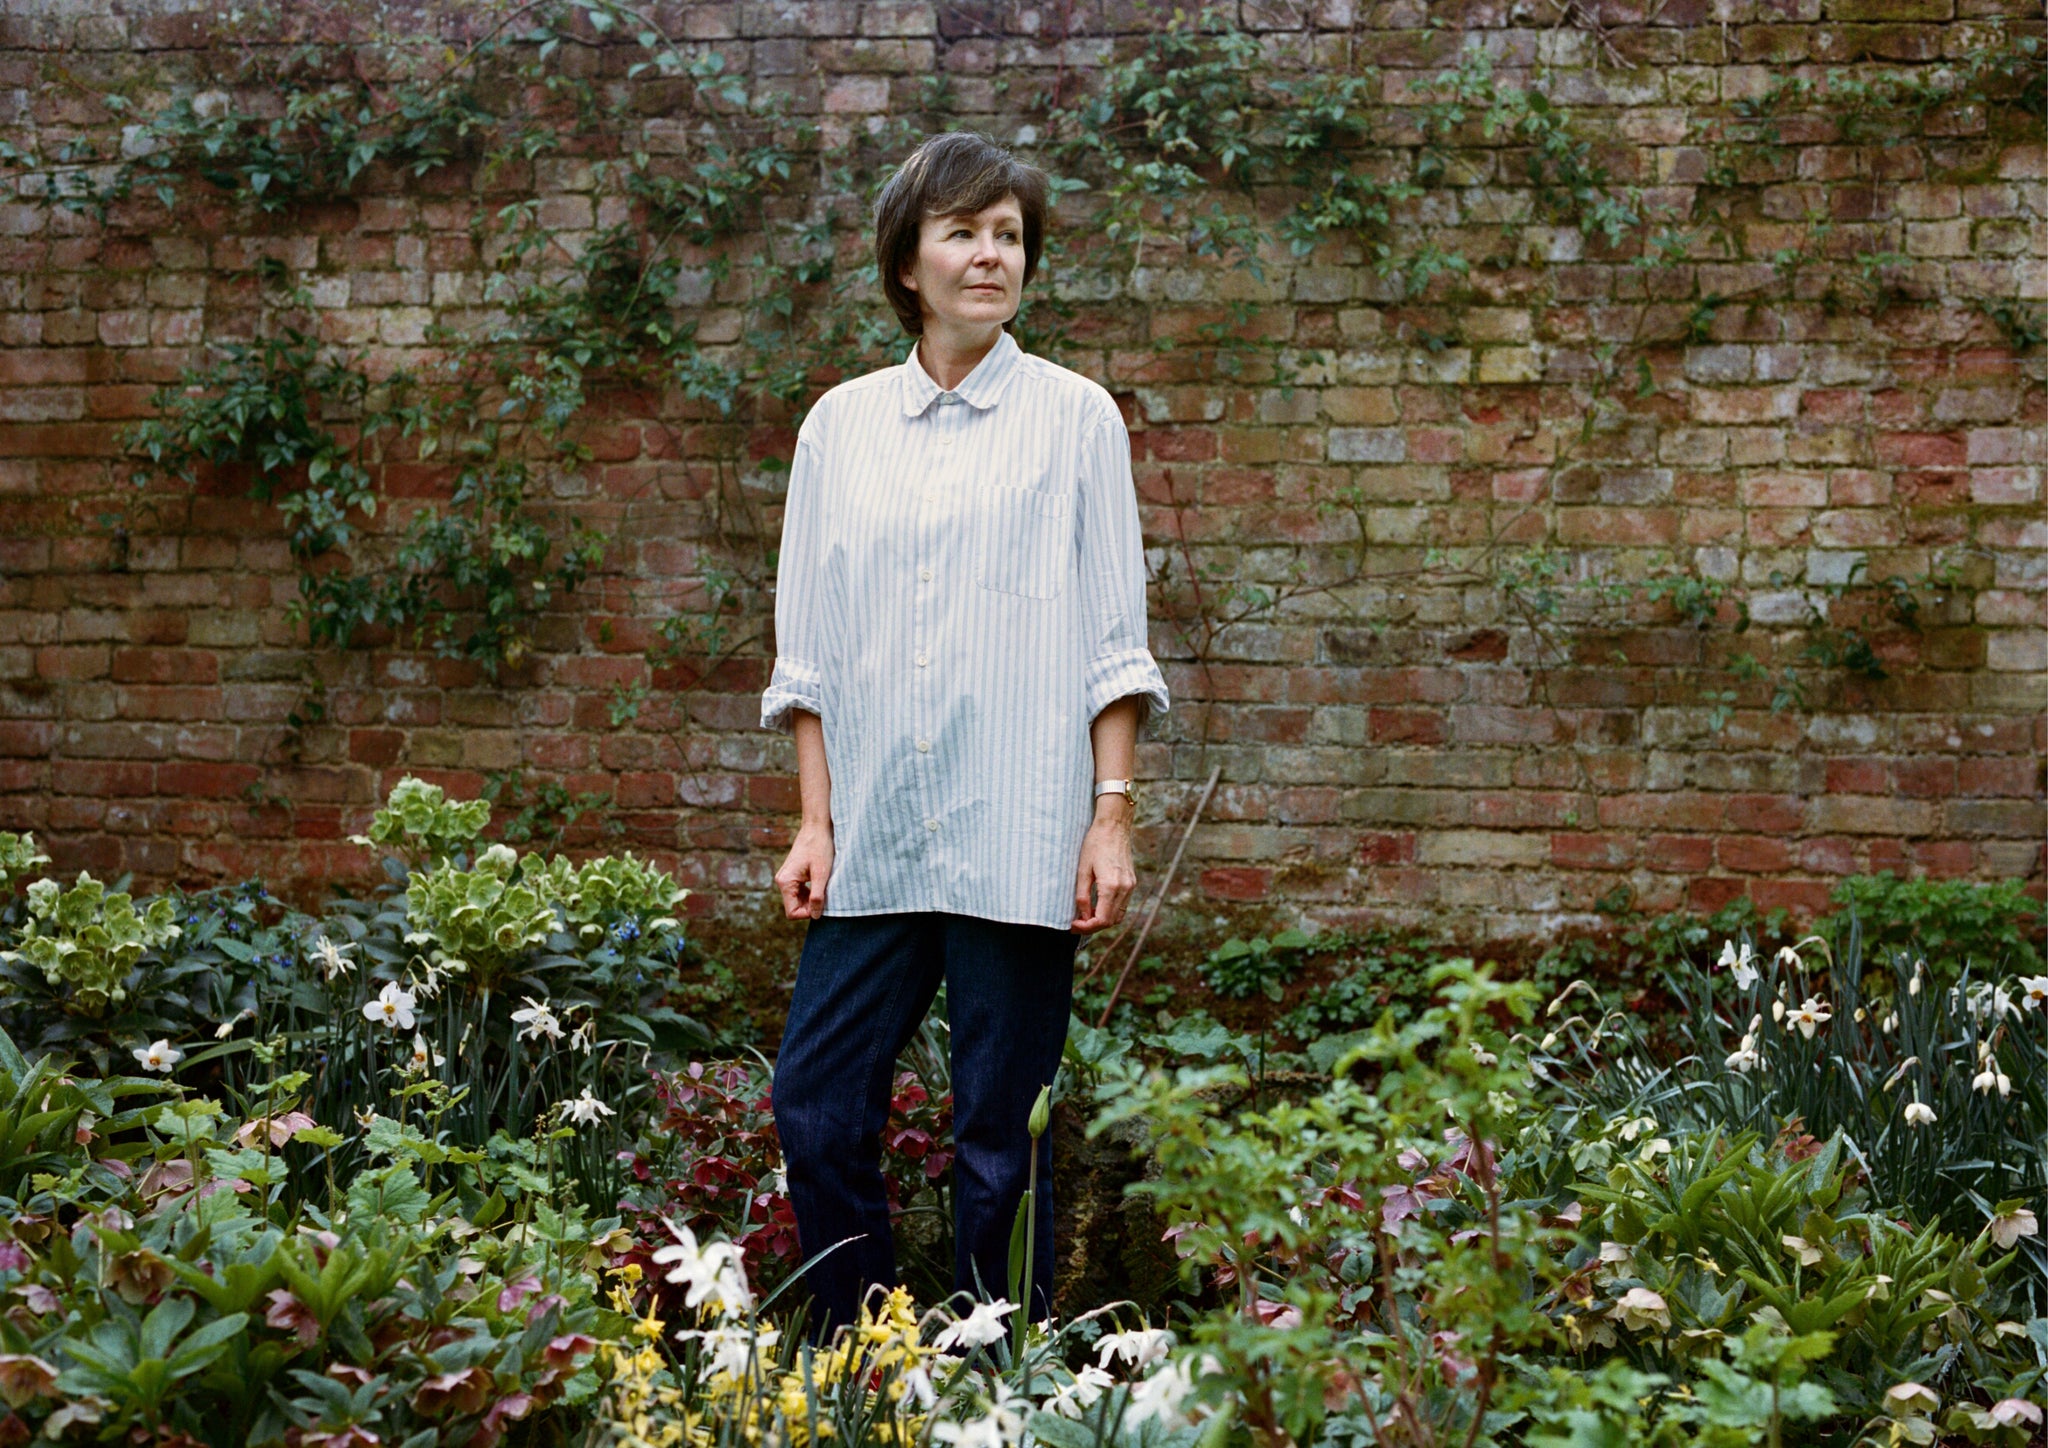 Female author standing in a garden